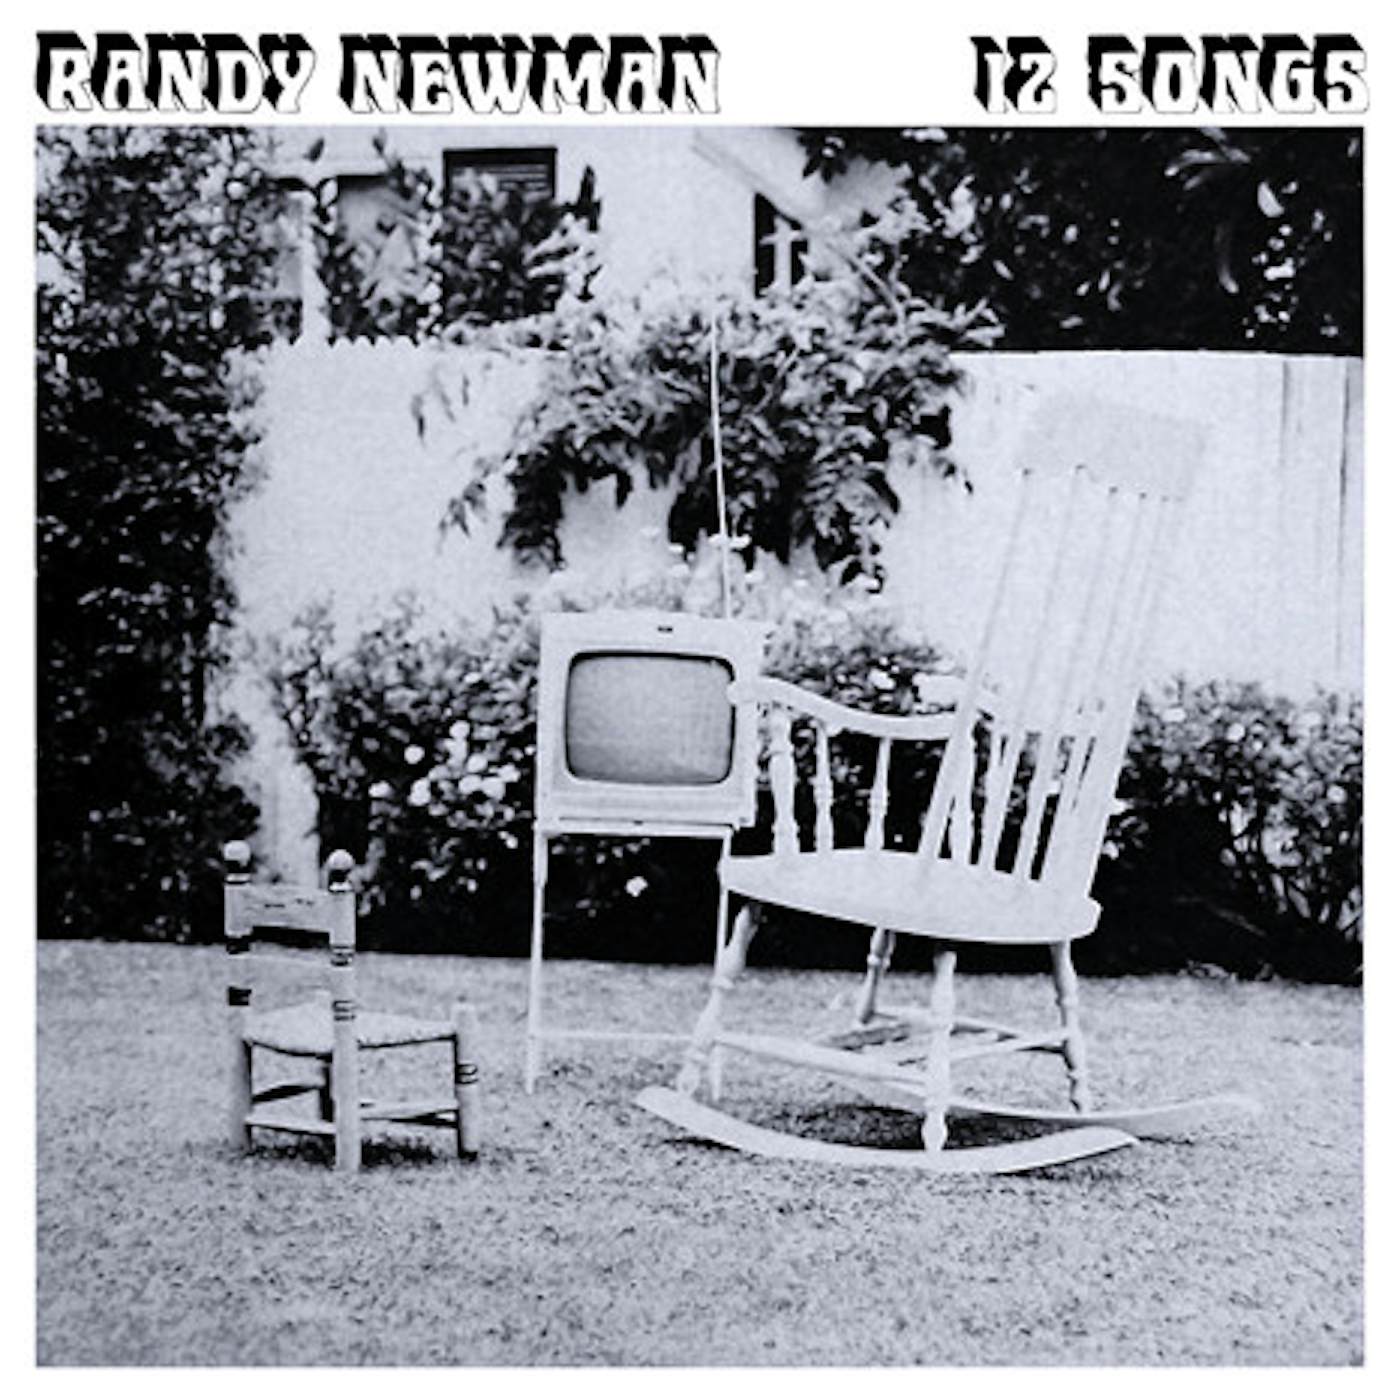 Randy Newman 12 Songs Vinyl Record